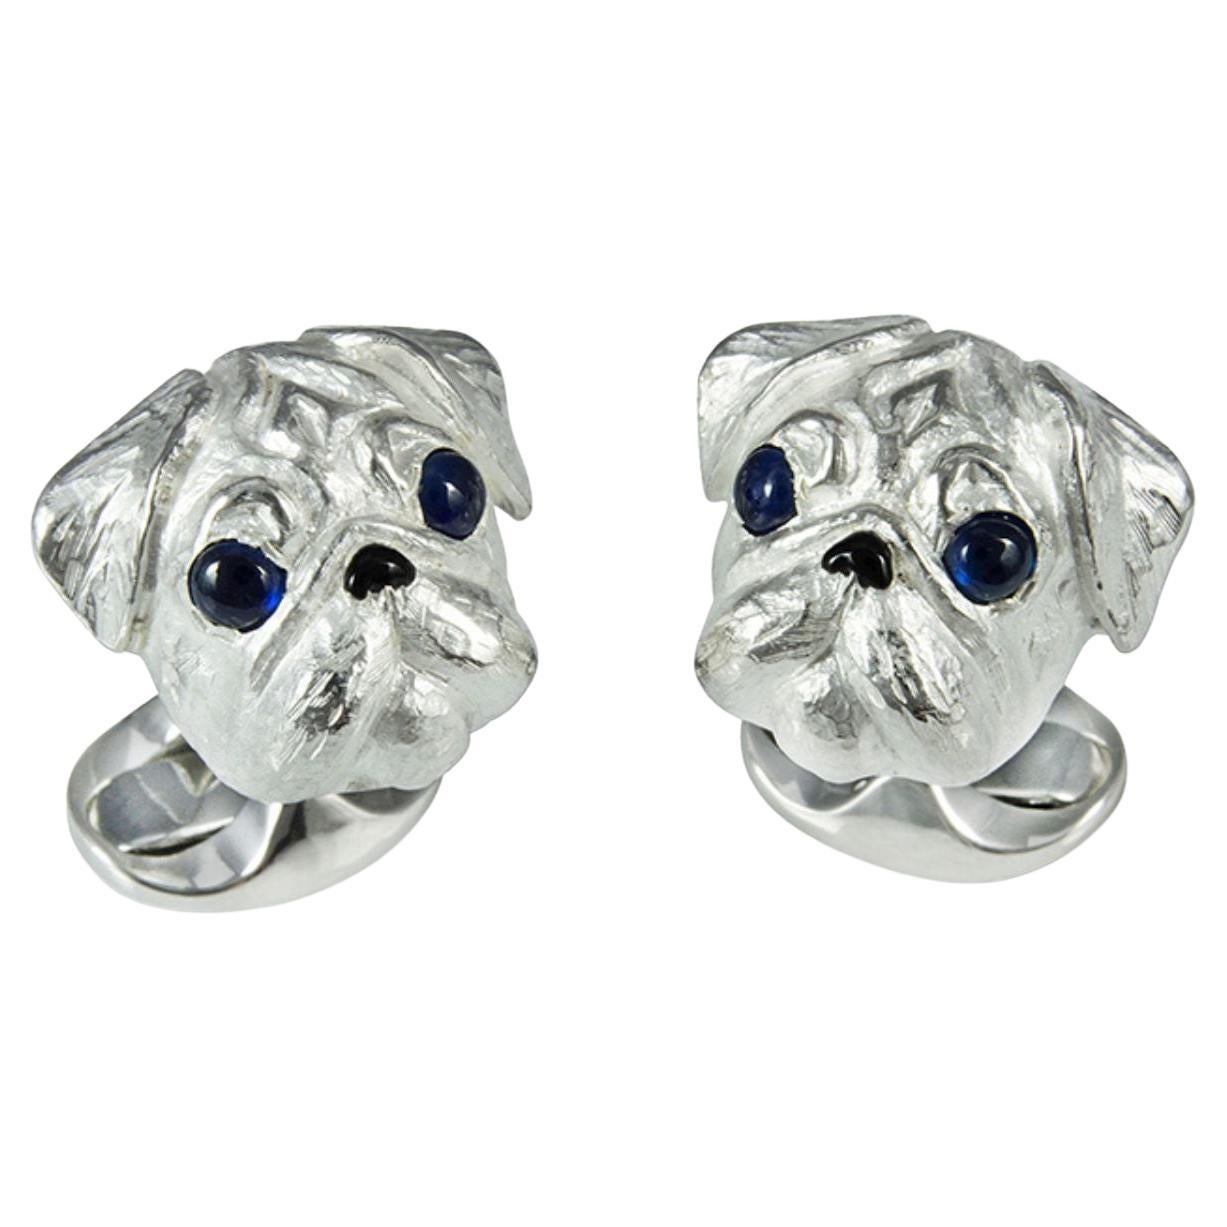 Deakin & Francis Sterling Silver Pug Cufflinks with Sapphire Eyes